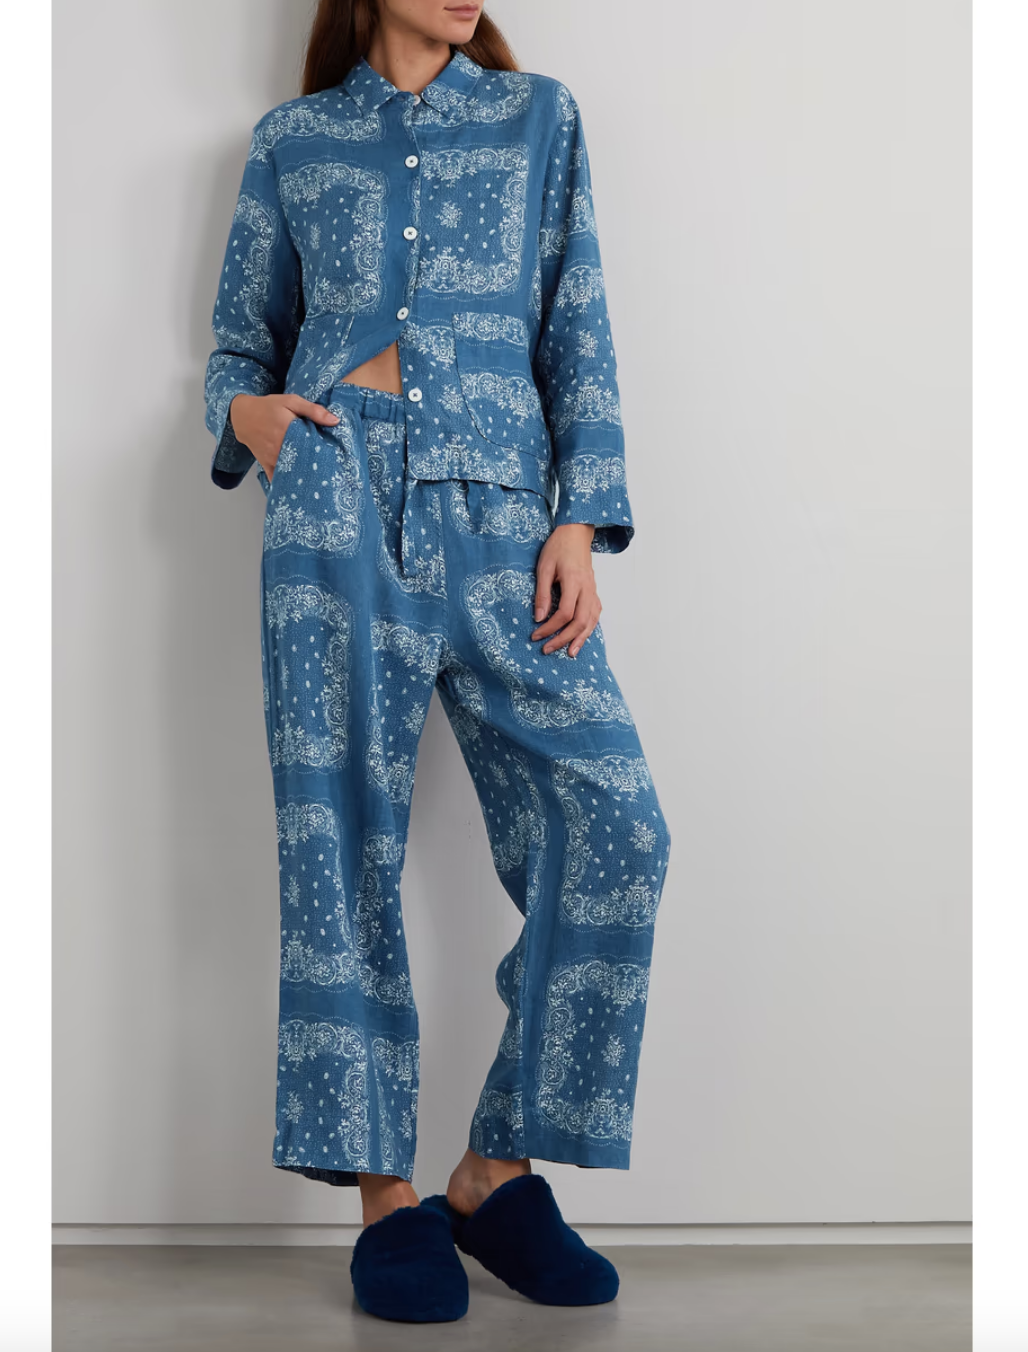 Danielle Olivera's Blue Paisley Print Pajamas